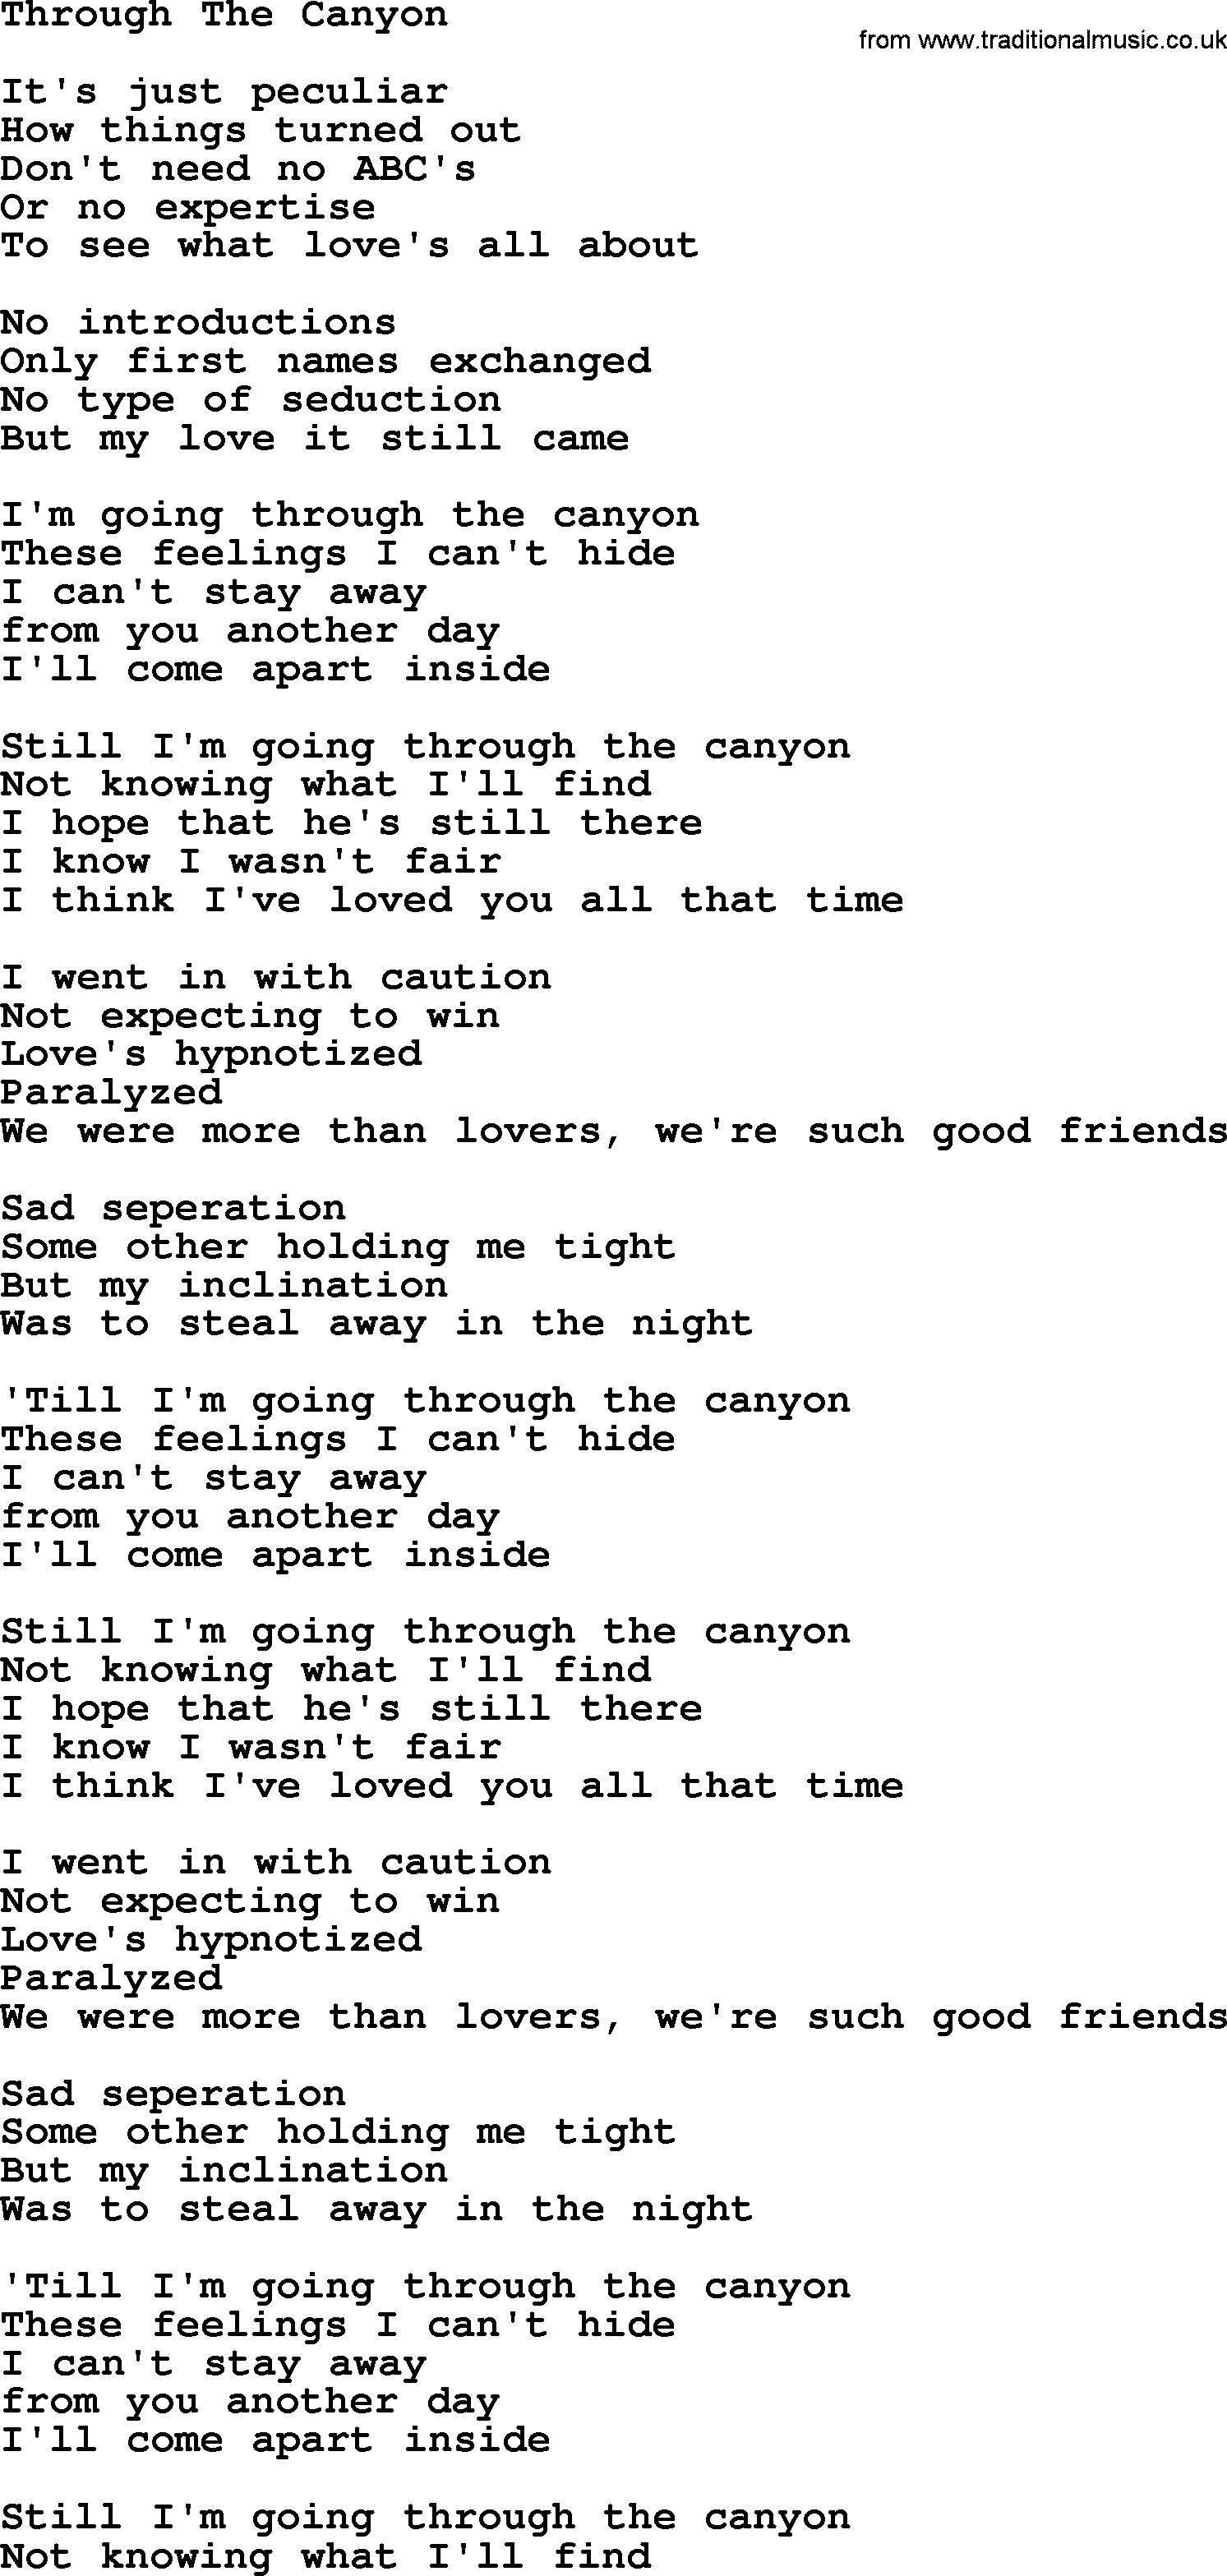 The Byrds song Through The Canyon, lyrics